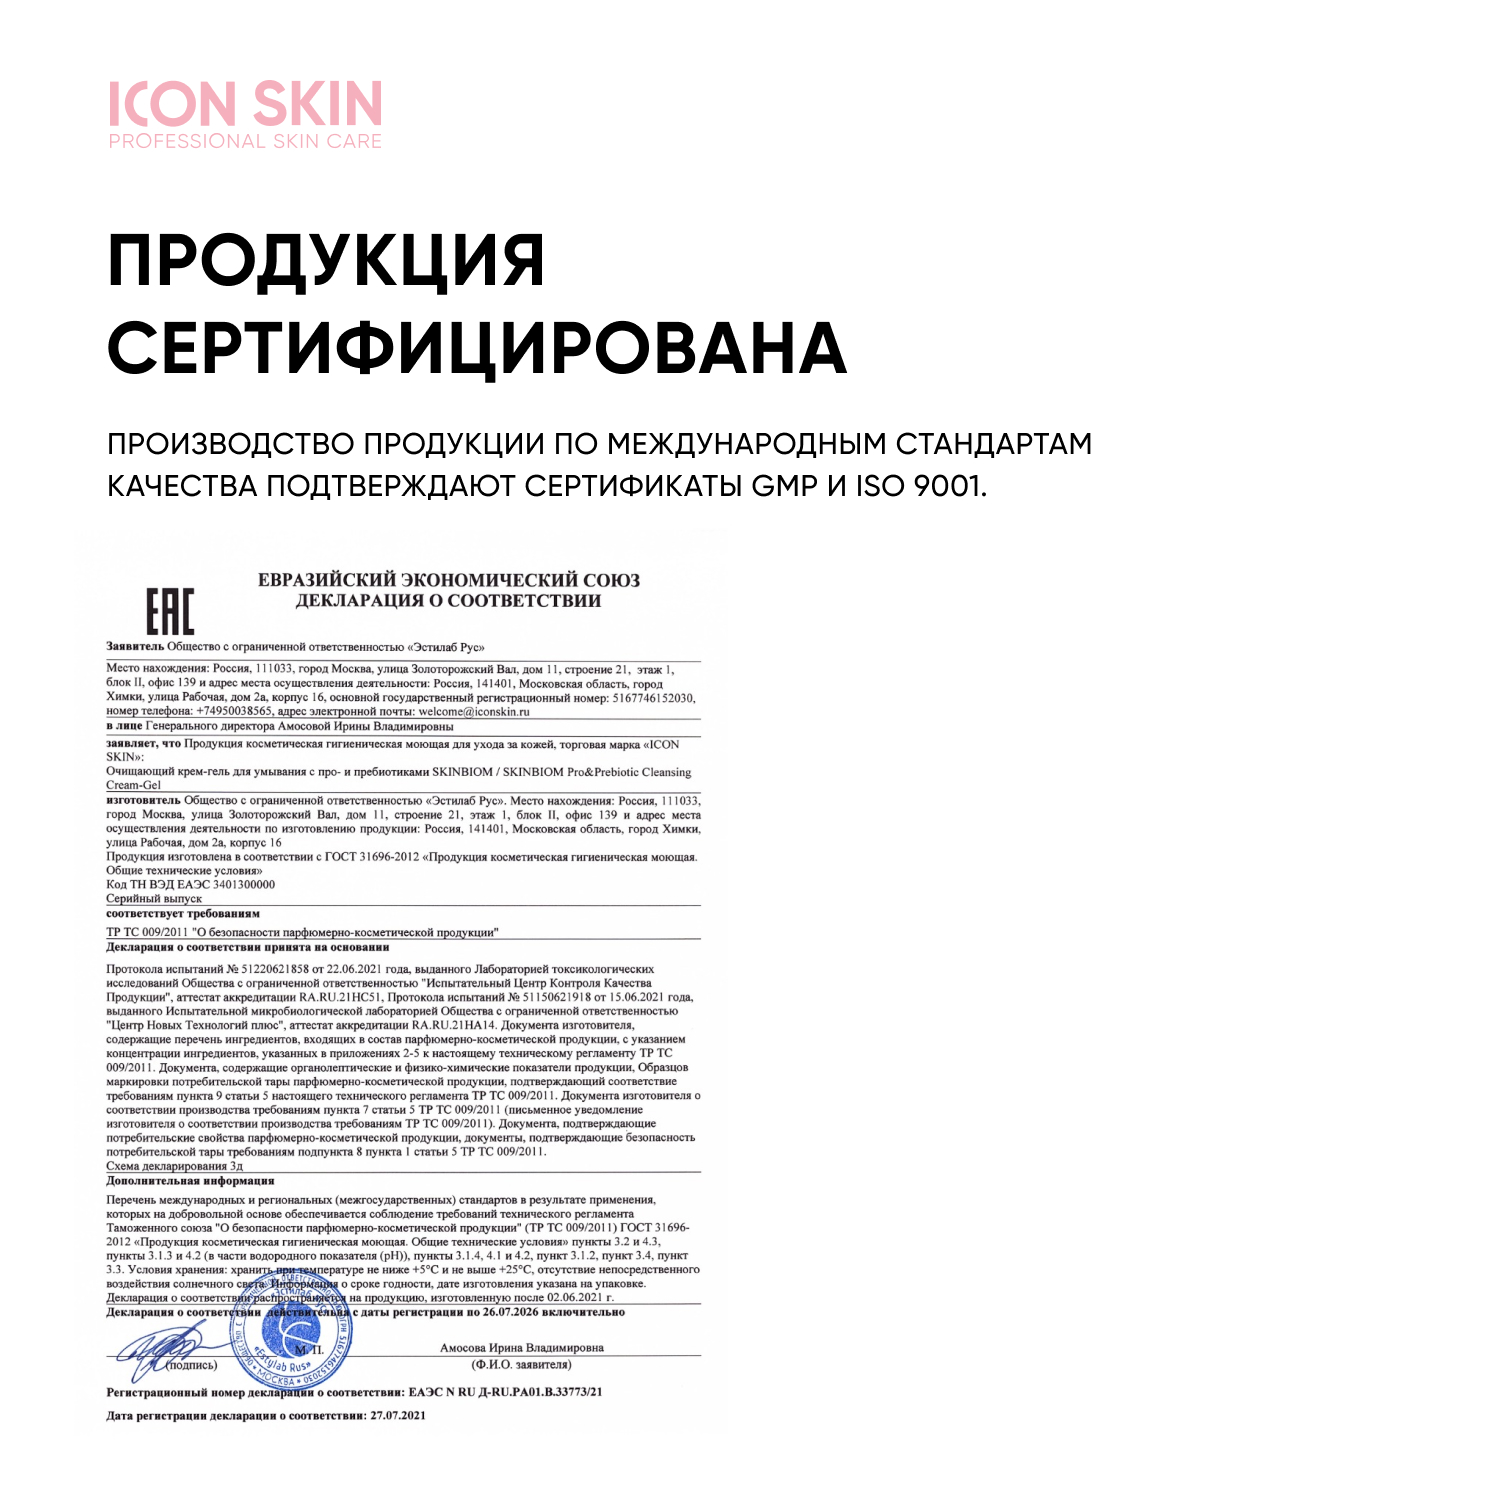 Крем-гель для умывания ICON SKIN очищающий c про- и пребиотиками skinbiom - фото 10